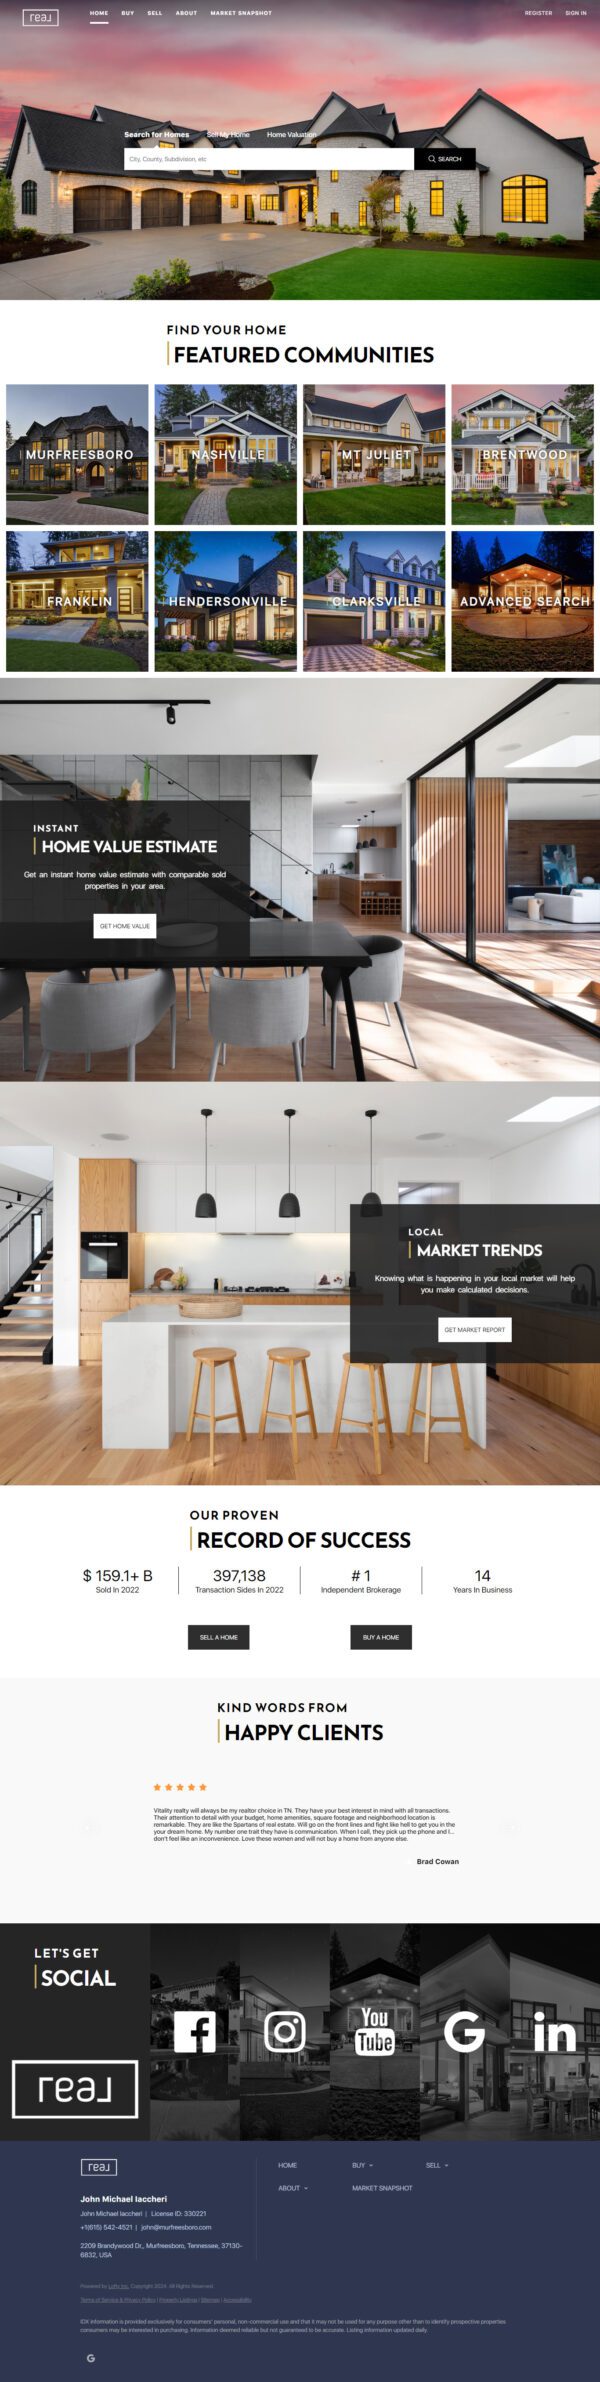 Semi-custom Metro home page design for Lofty/Chime real estate IDX websites.